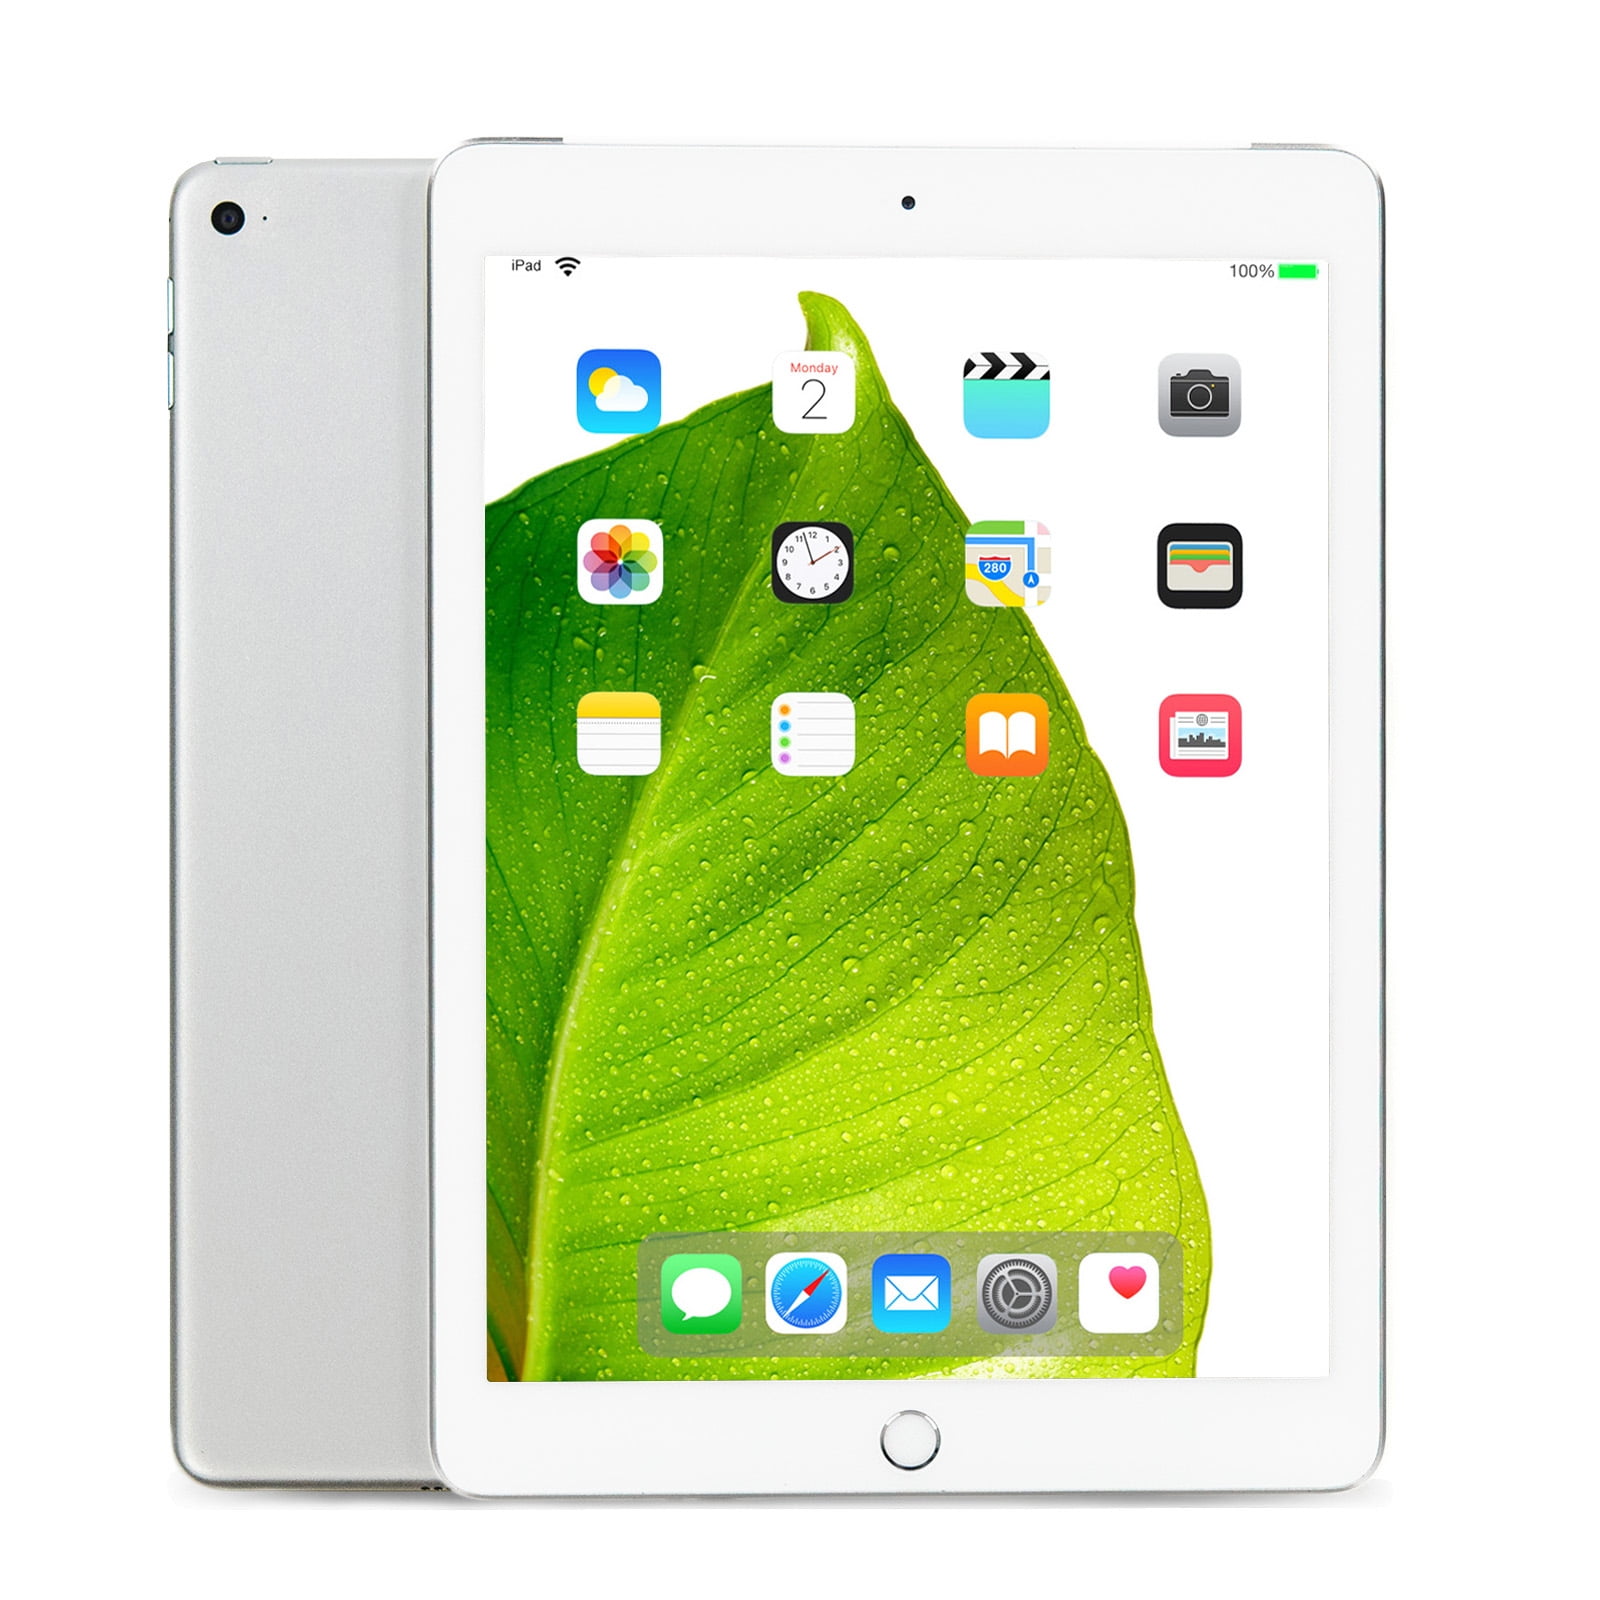 UsedApple iPad 5th Gen. Silver 9.7